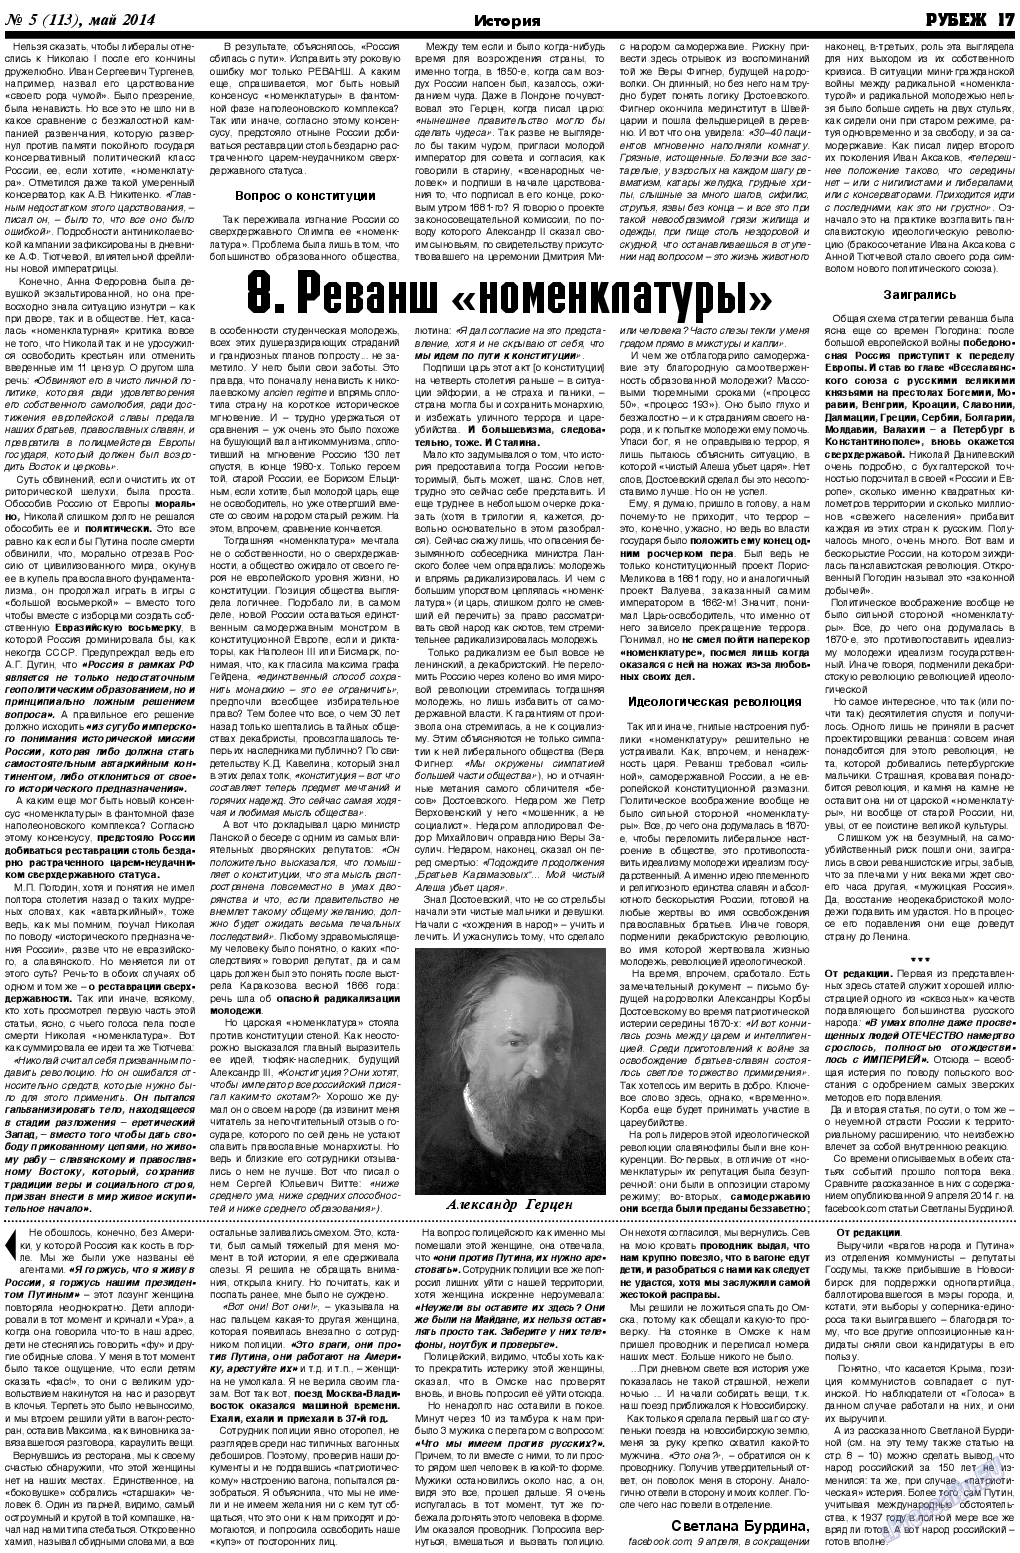 Рубеж, газета. 2014 №5 стр.17